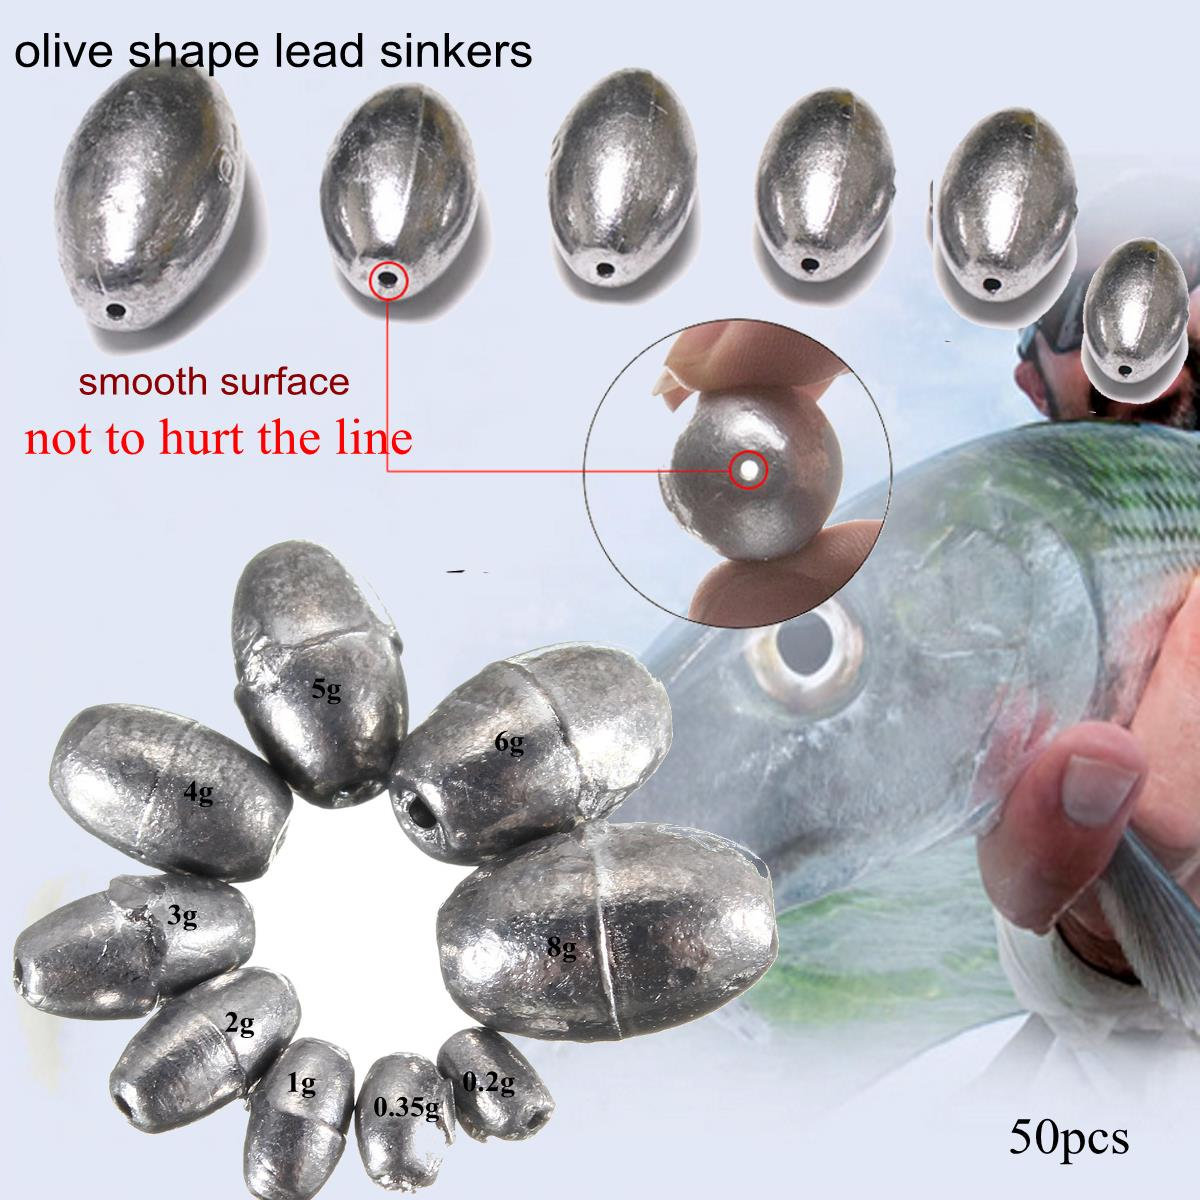 50pcs-Metal-Olive-Shape-Leads-Sinkers-Fishing-Sinker-Pure-Lead-Making-Sea-Fishing-Sinker-Tackle-1341166